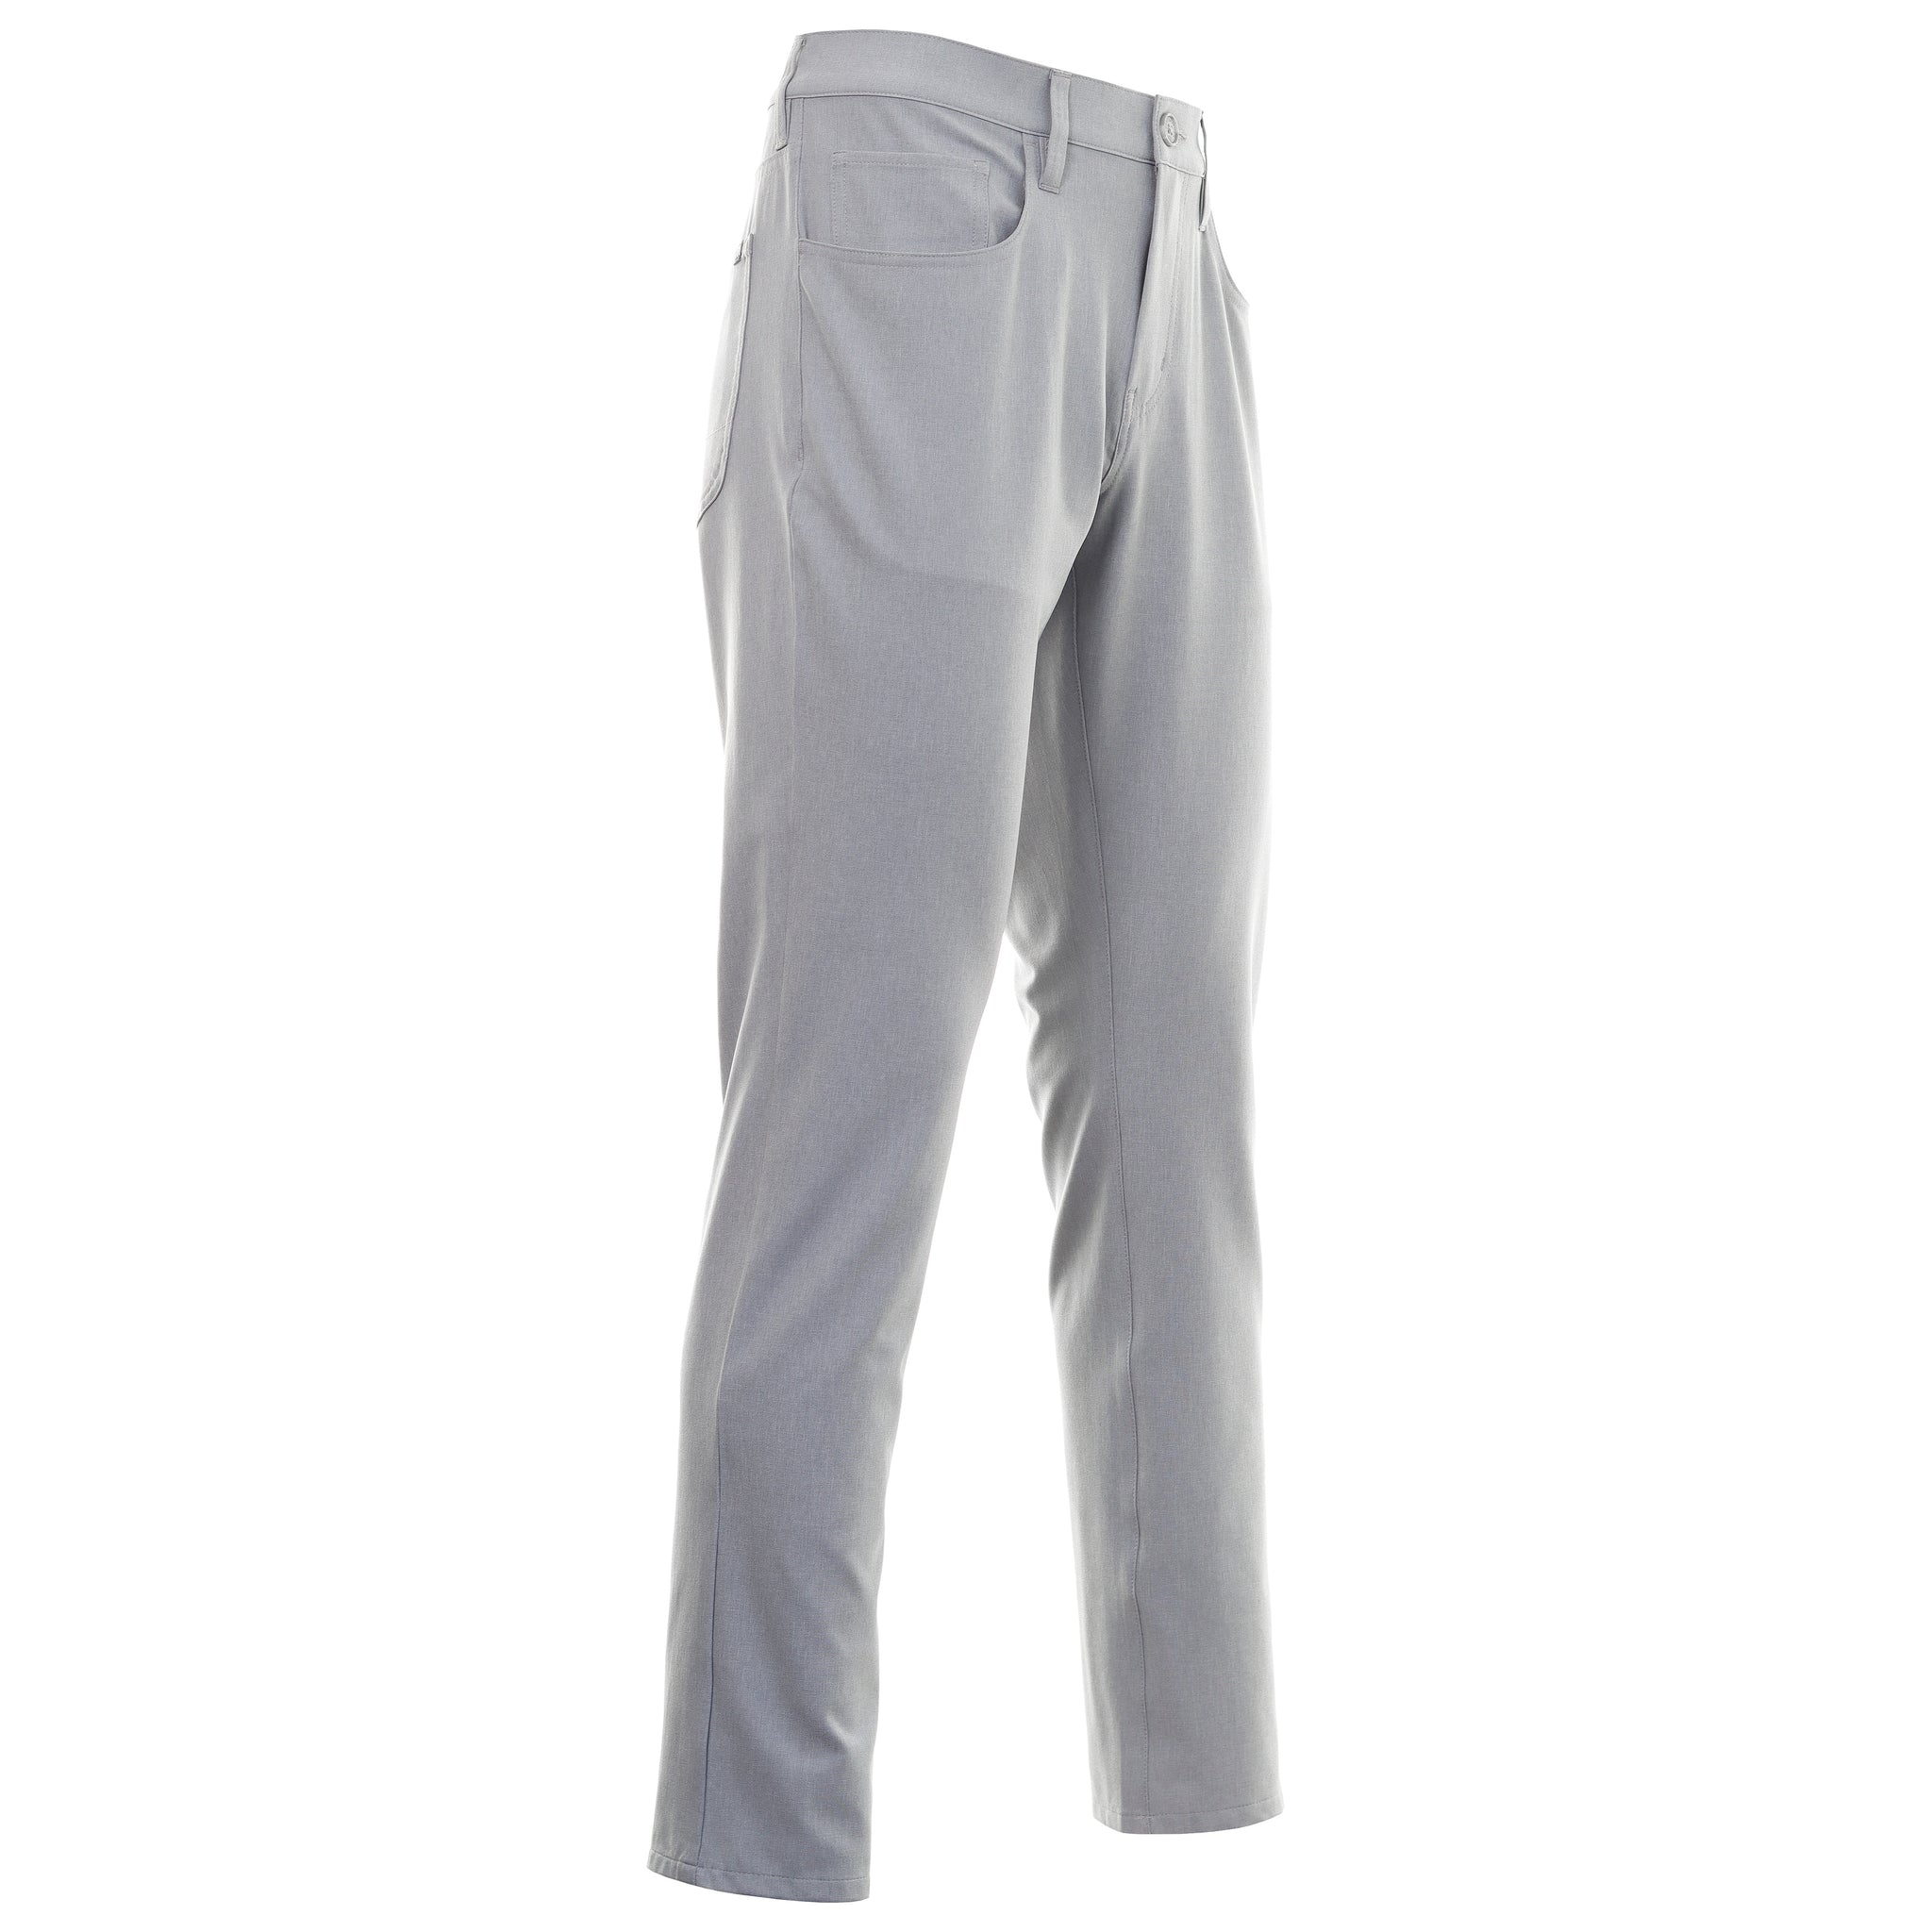 travismathew-open-to-close-trousers-1mt435-heather-sleet